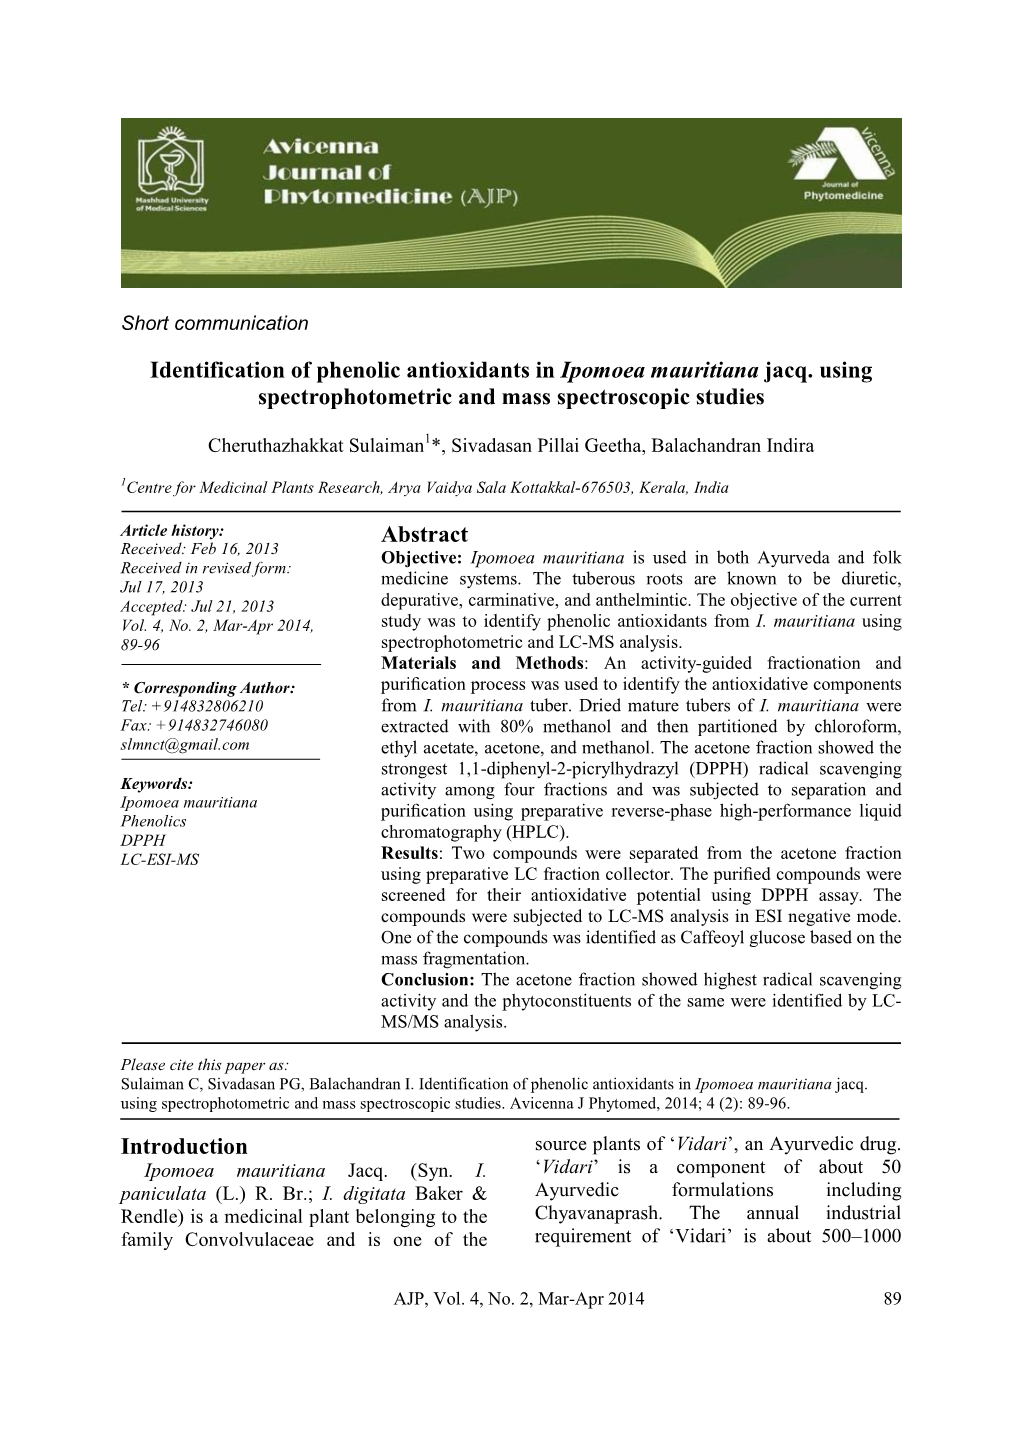 Identification of Phenolic Antioxidants in Ipomoea Mauritiana Jacq. Using Spectrophotometric and Mass Spectroscopic Studies